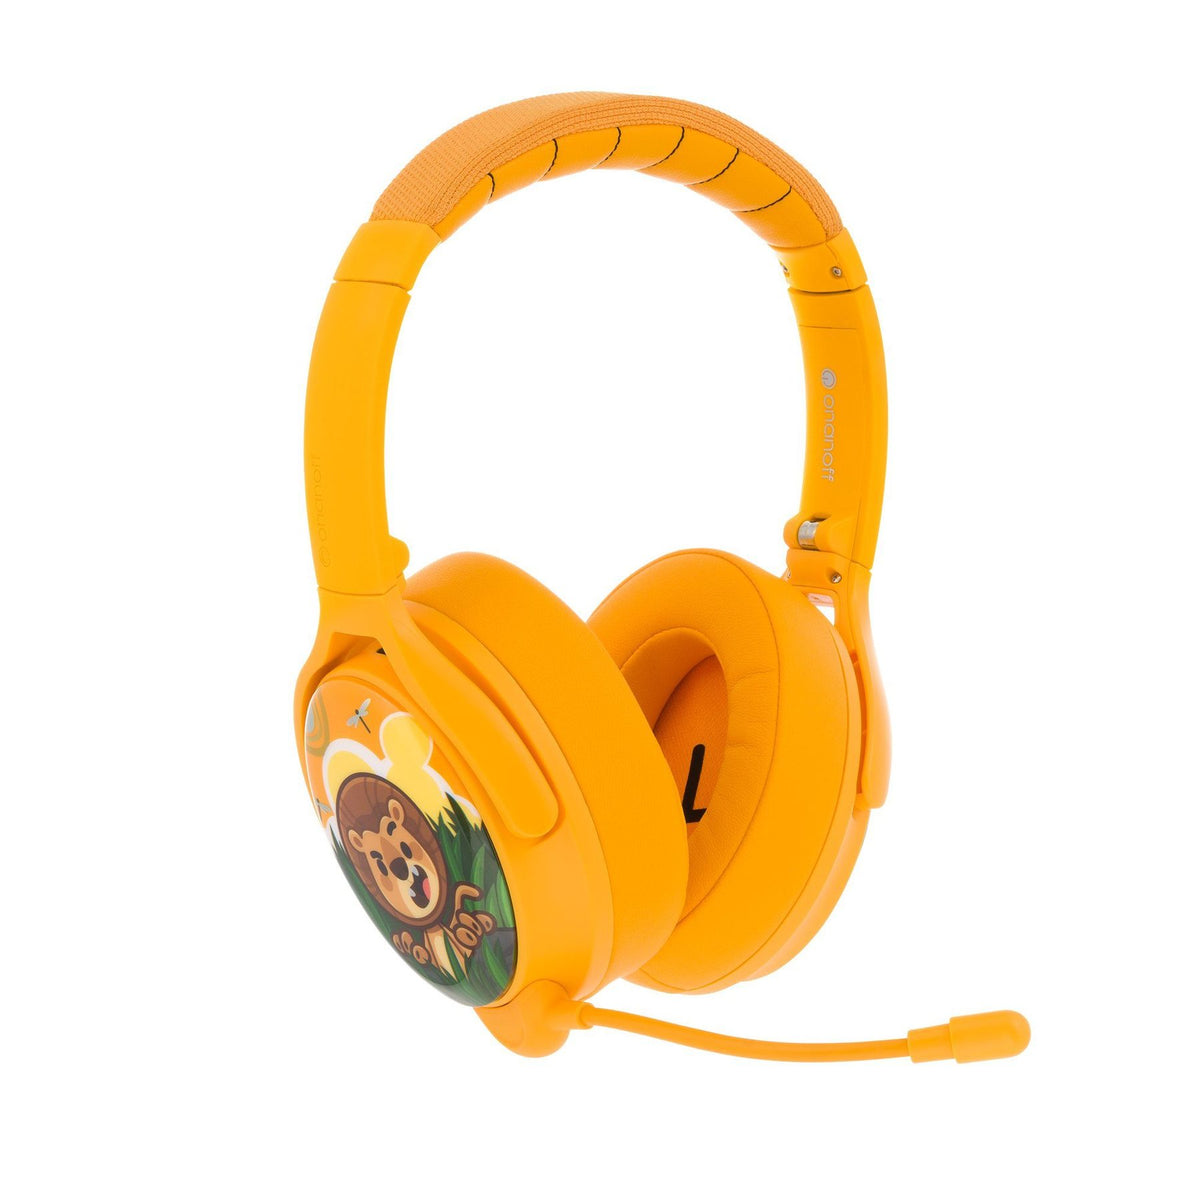 BUDDYPHONES Cosmos Plus Active Noise Cancellation Bluetooth Headphones - Sun Yellow